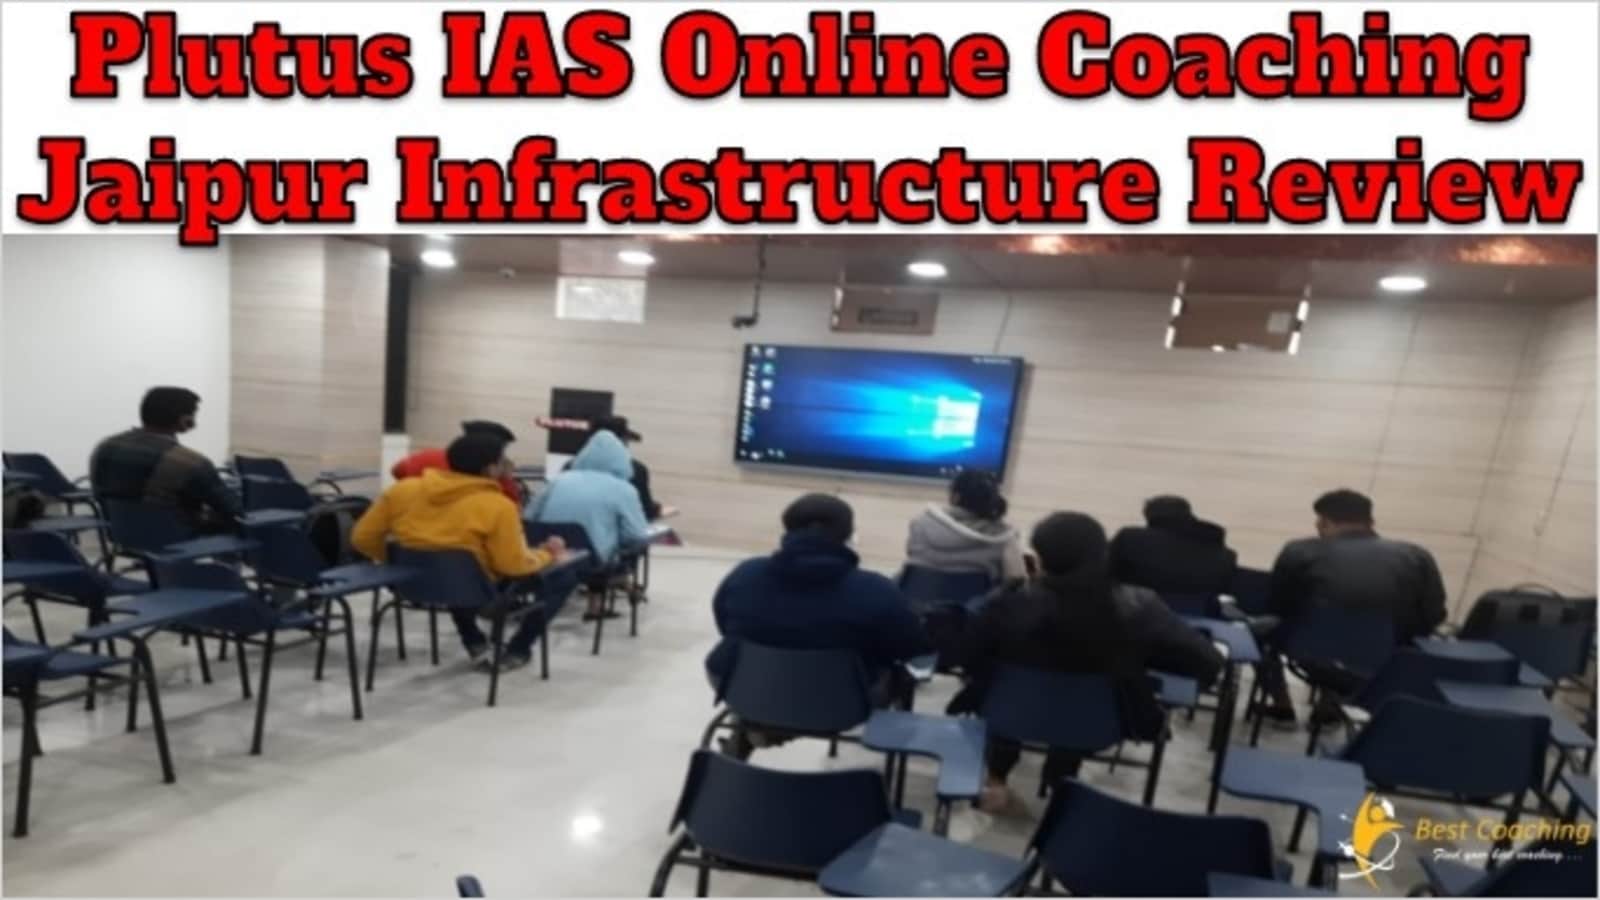 Plutus IAS Online Coaching Jaipur Infrastructure Review